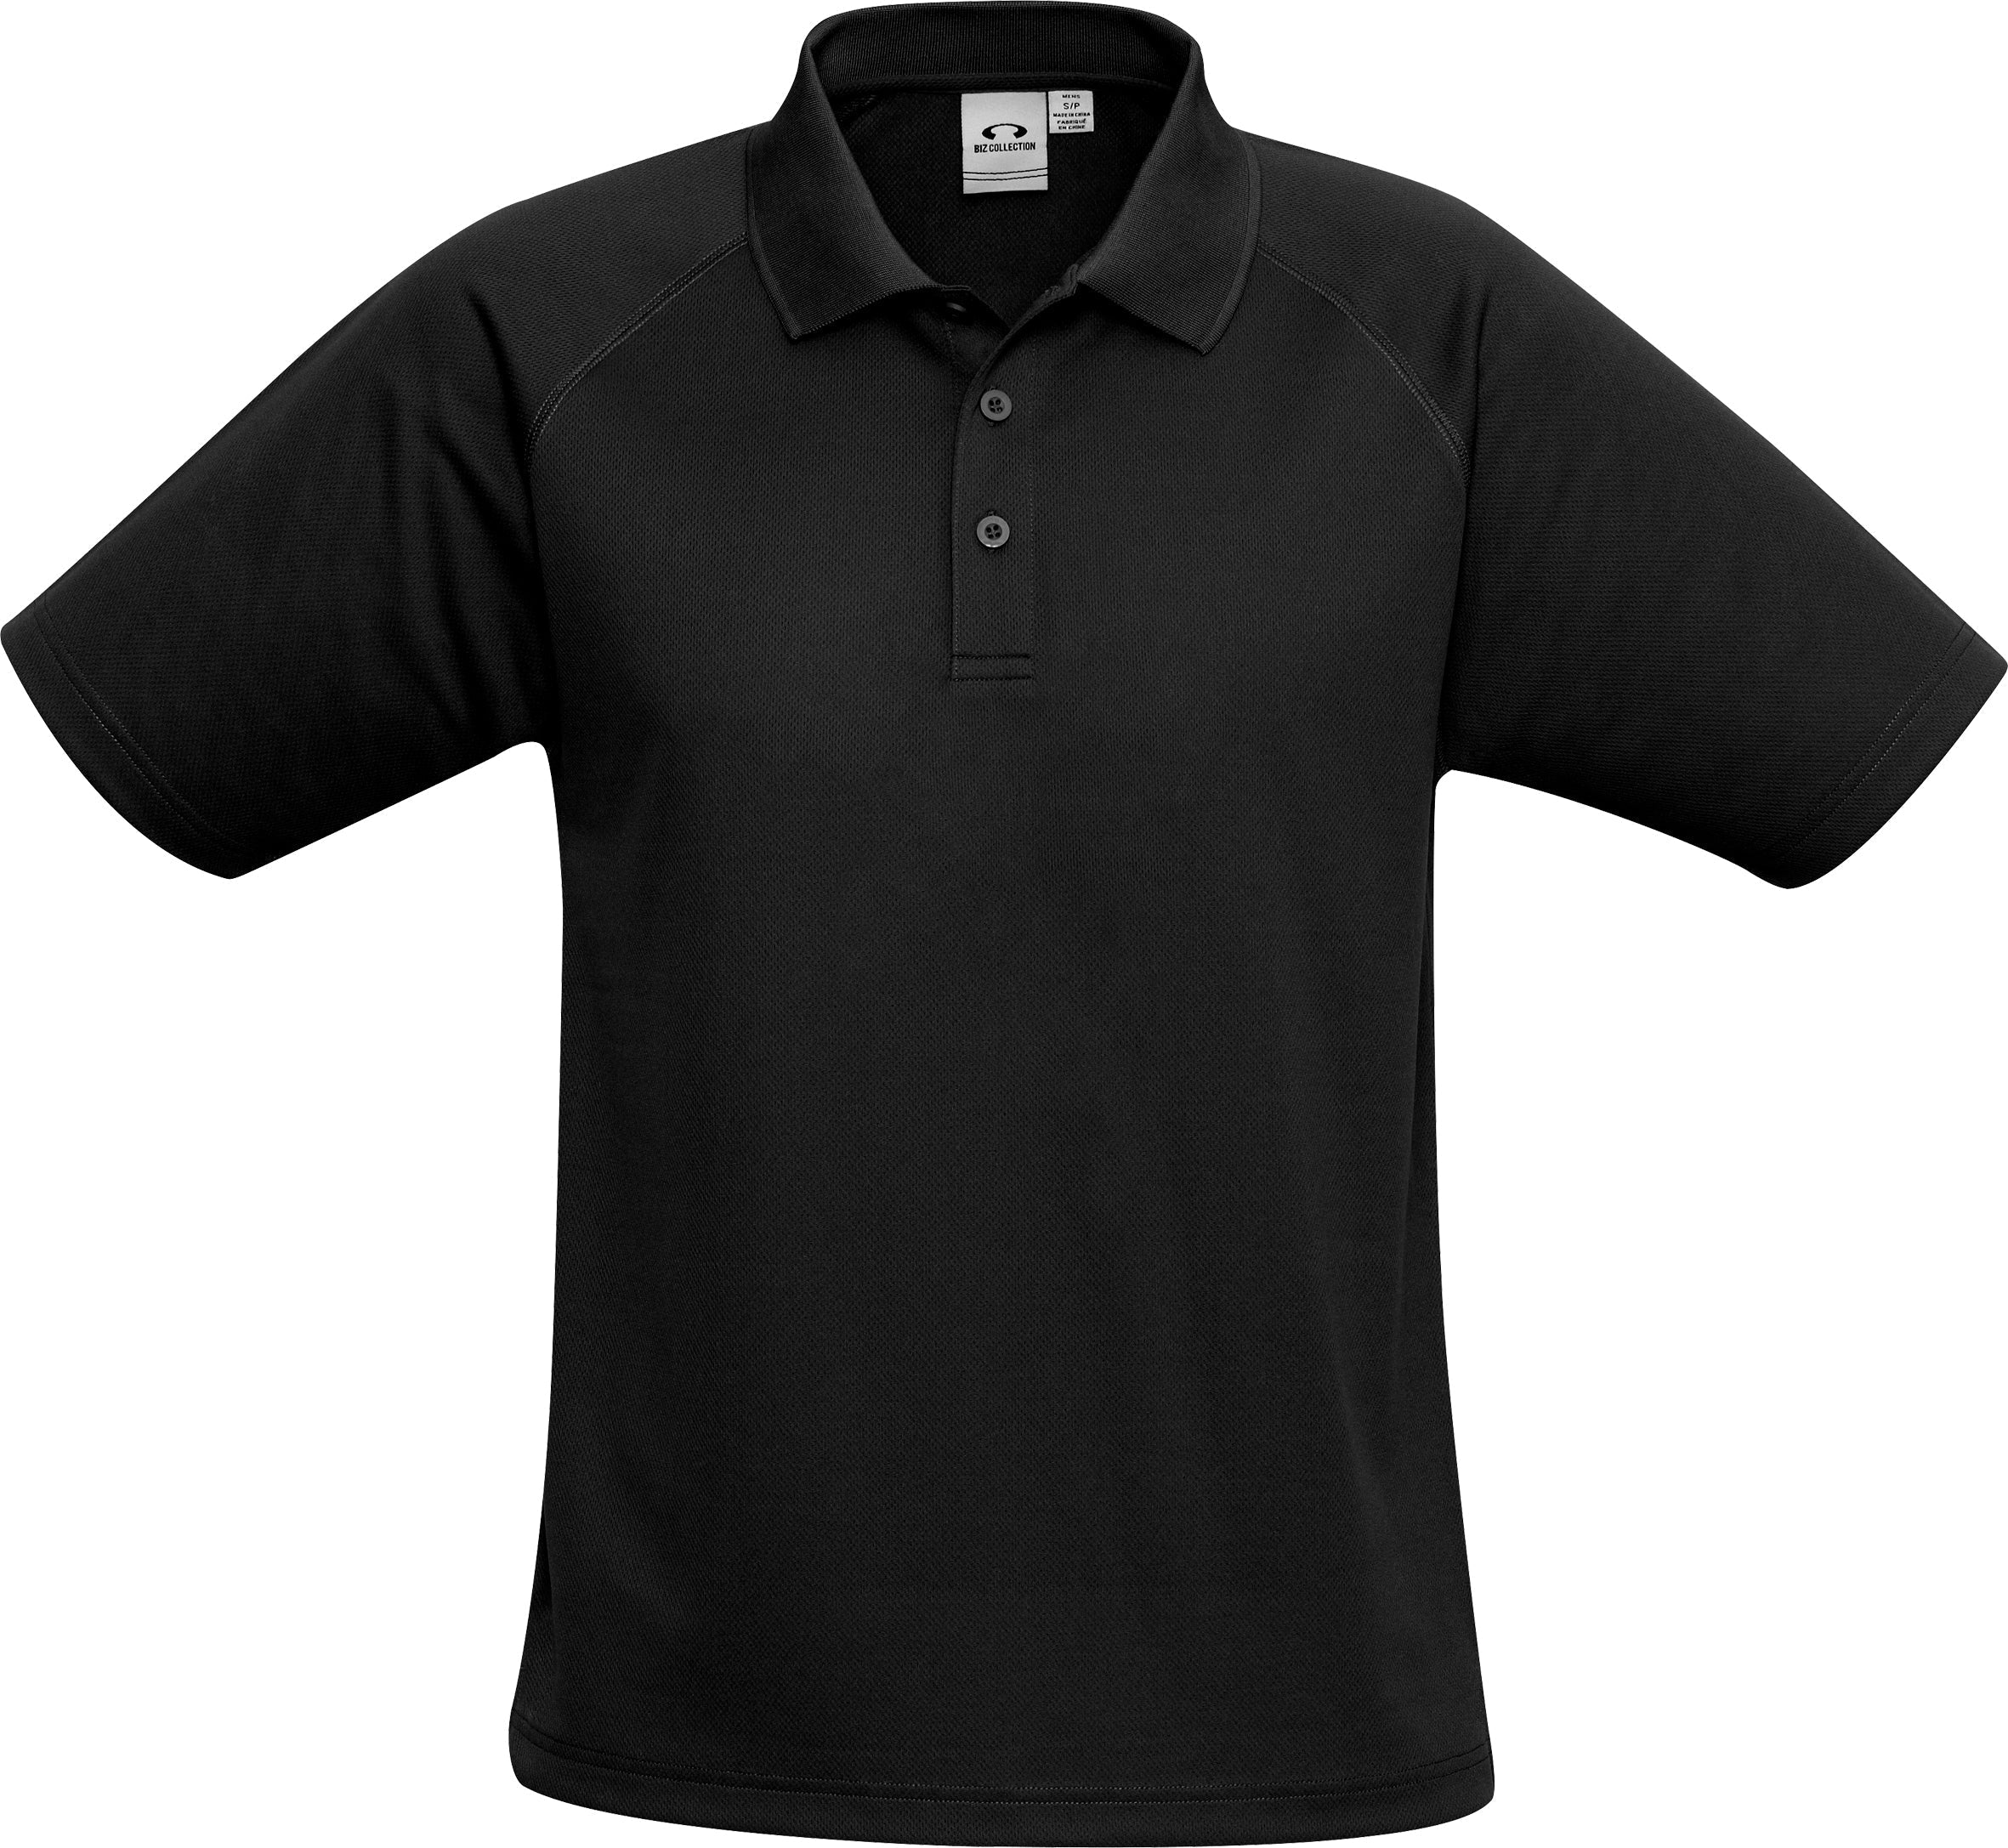 Mens Sprint Golf Shirt - White Only-L-Black-BL